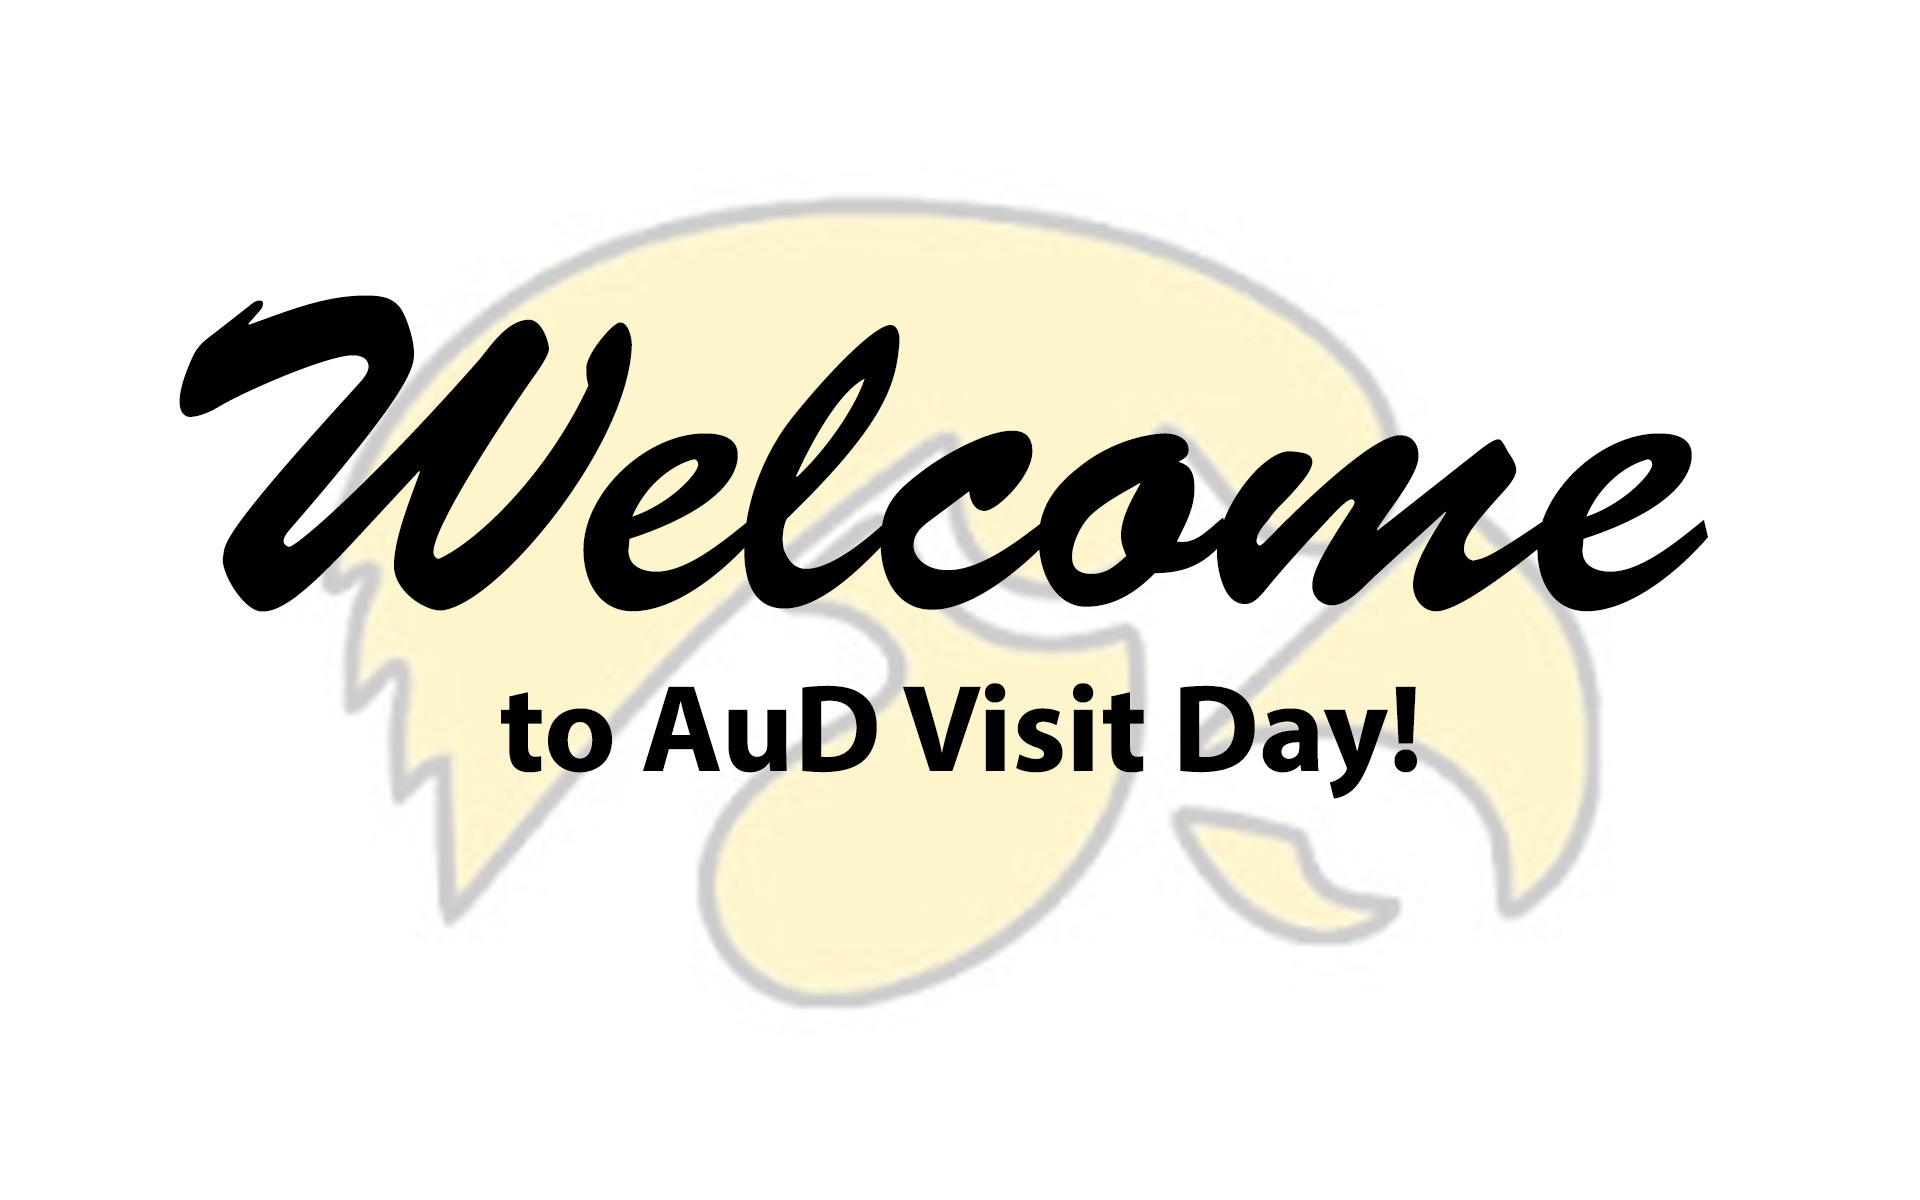 aud visit day